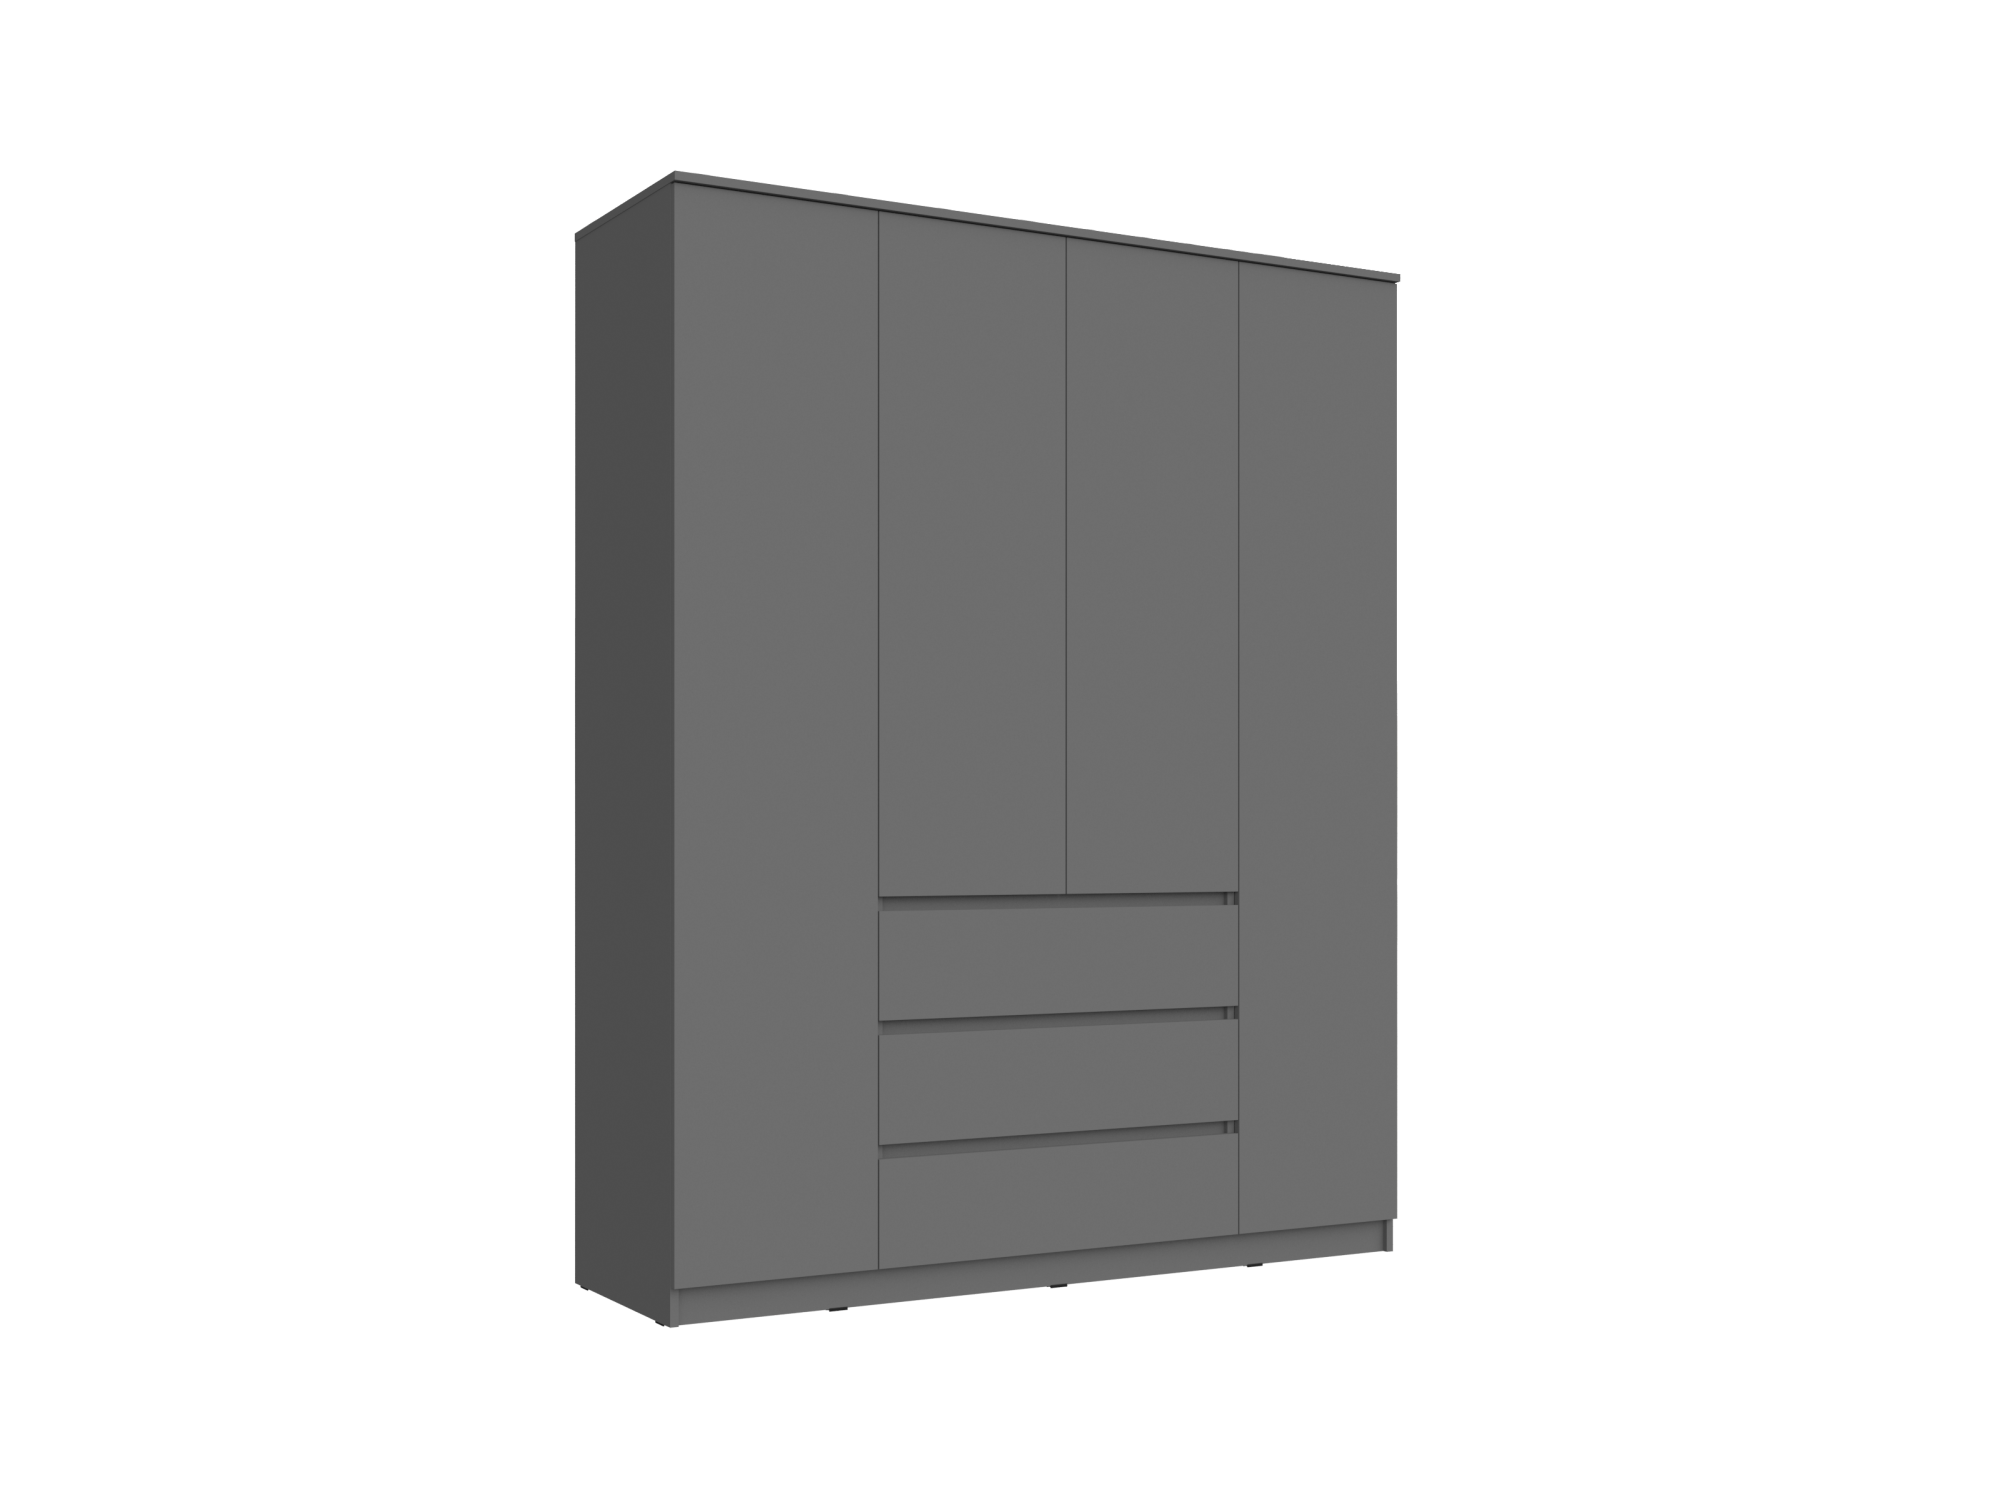 Челси Шкаф 1600 (Графит, Графит) Черный, ЛДСП челси шкаф угловой прямой графит графит графит черный лдсп